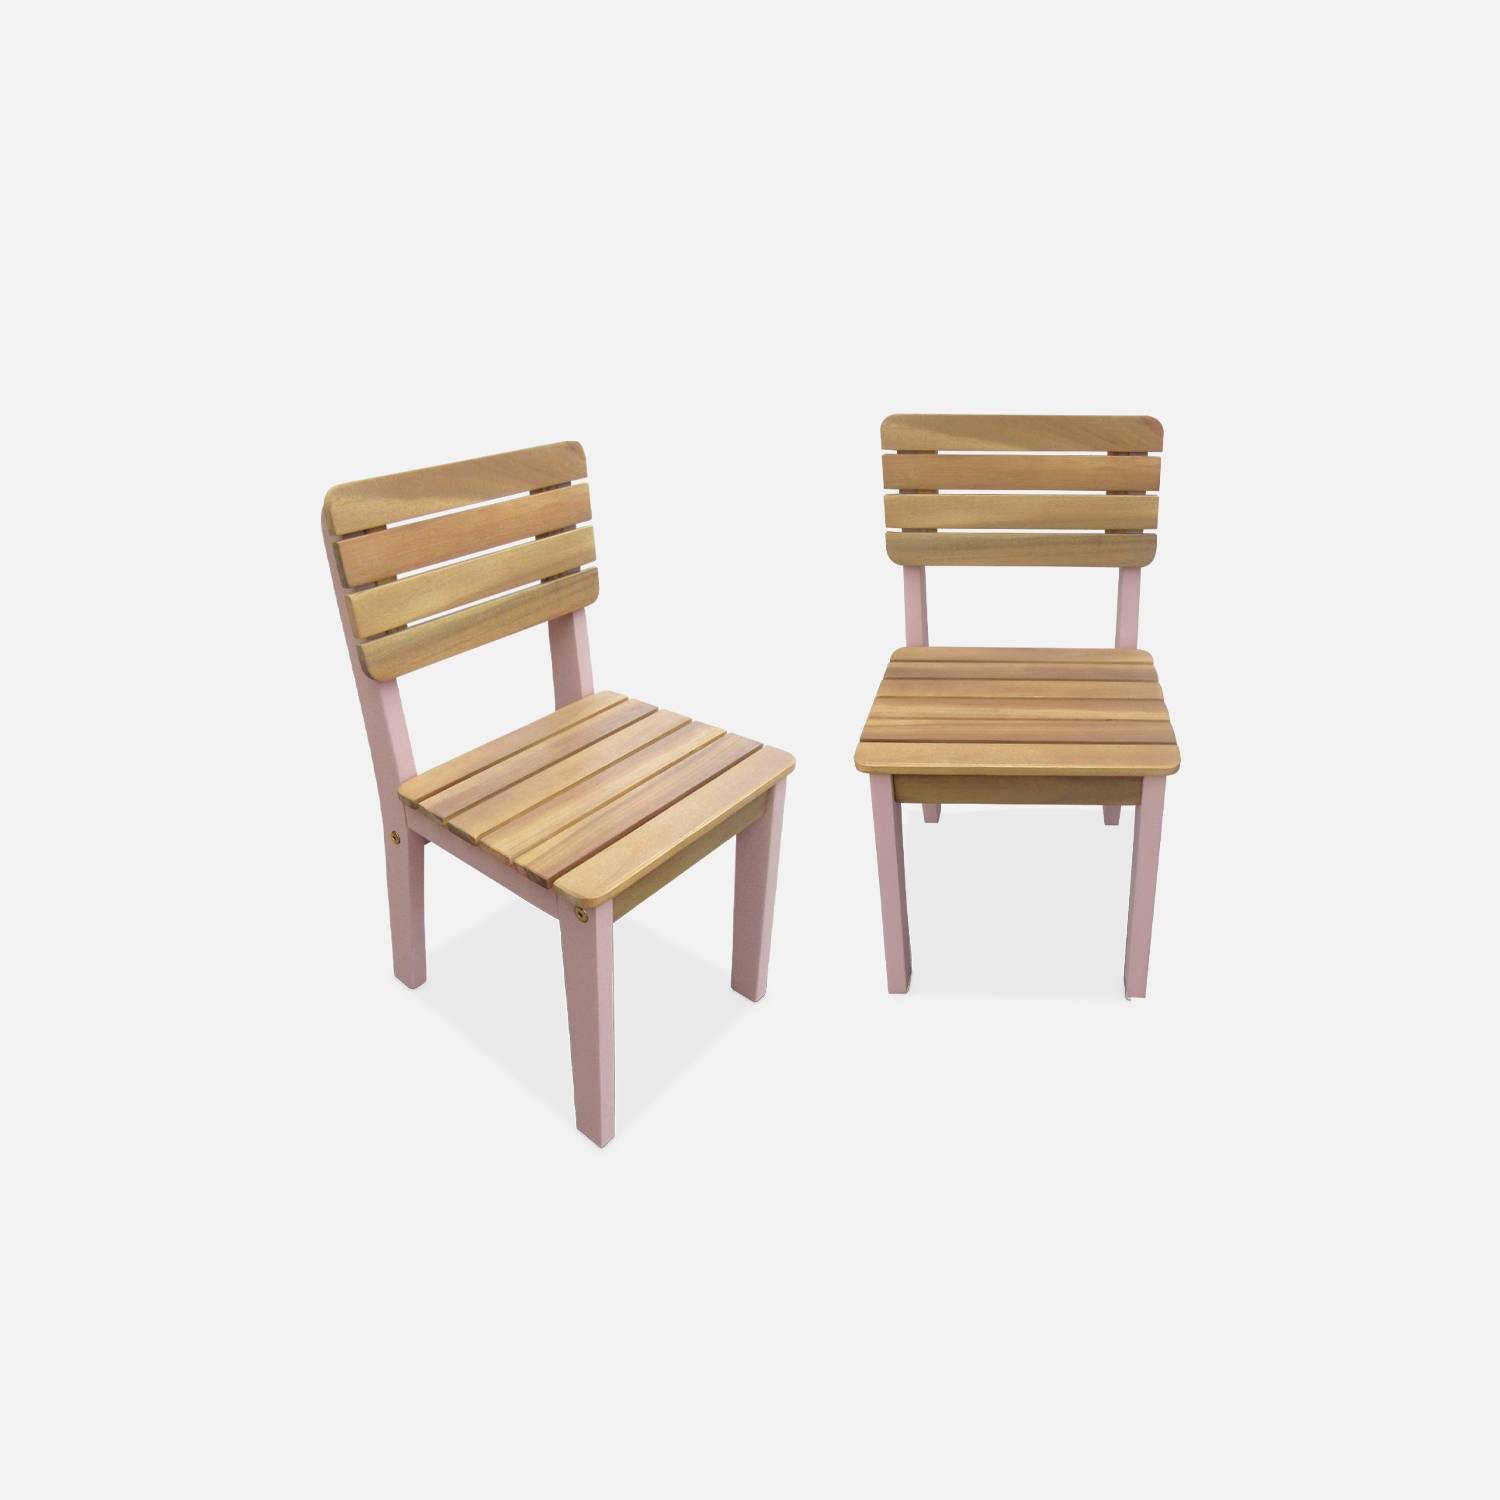 Solid Wood Chairs for Children, Indoor/Outdoor (Set of 2), pink